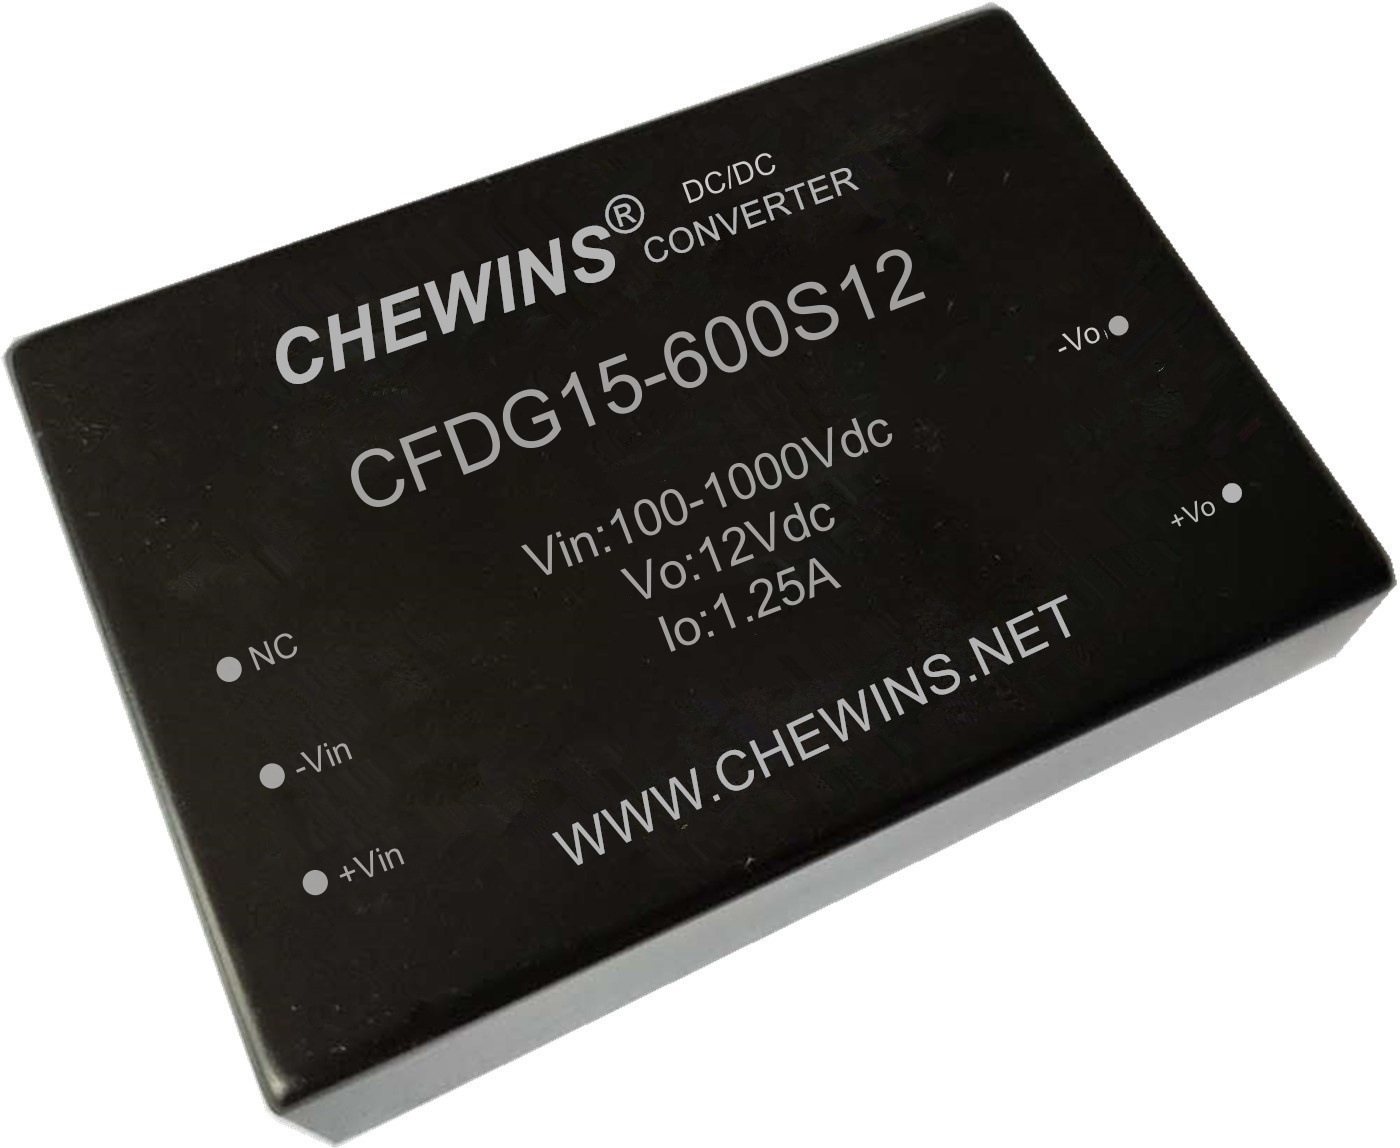 CFDG15光伏专用电源(100-1000VDC输入)